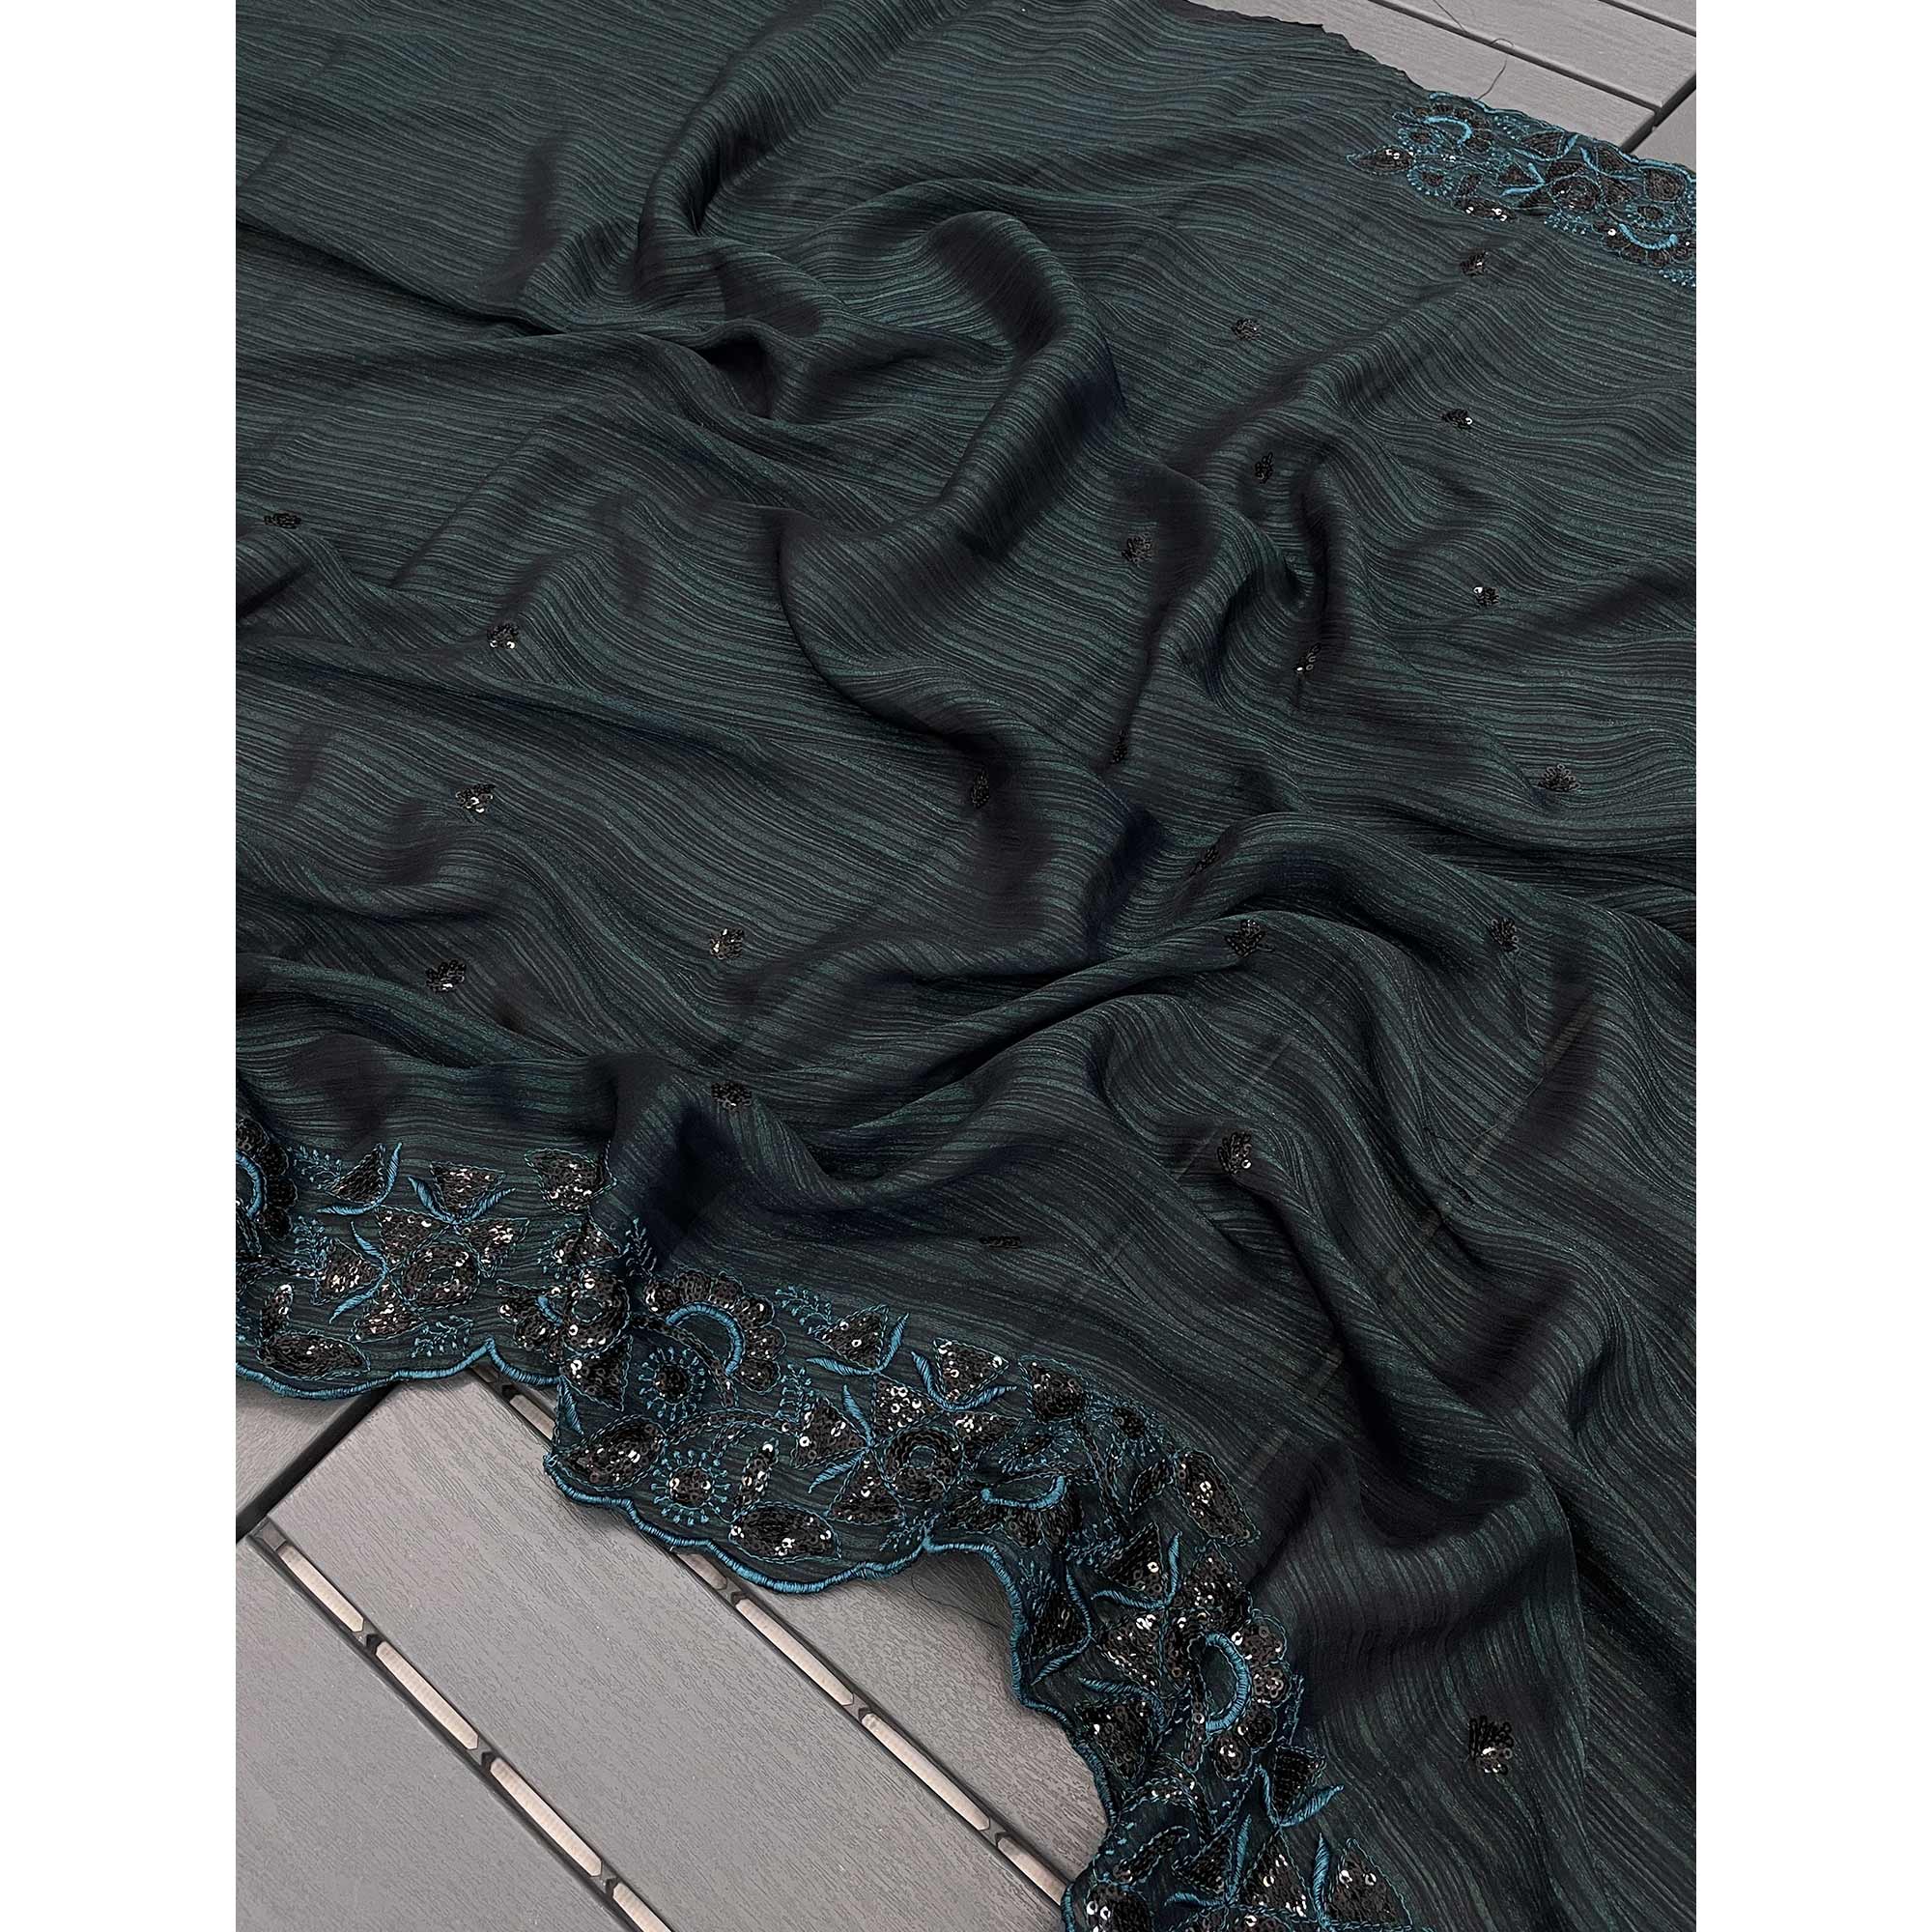 Dark Morpich Sequins Embroidered Chiffon Saree